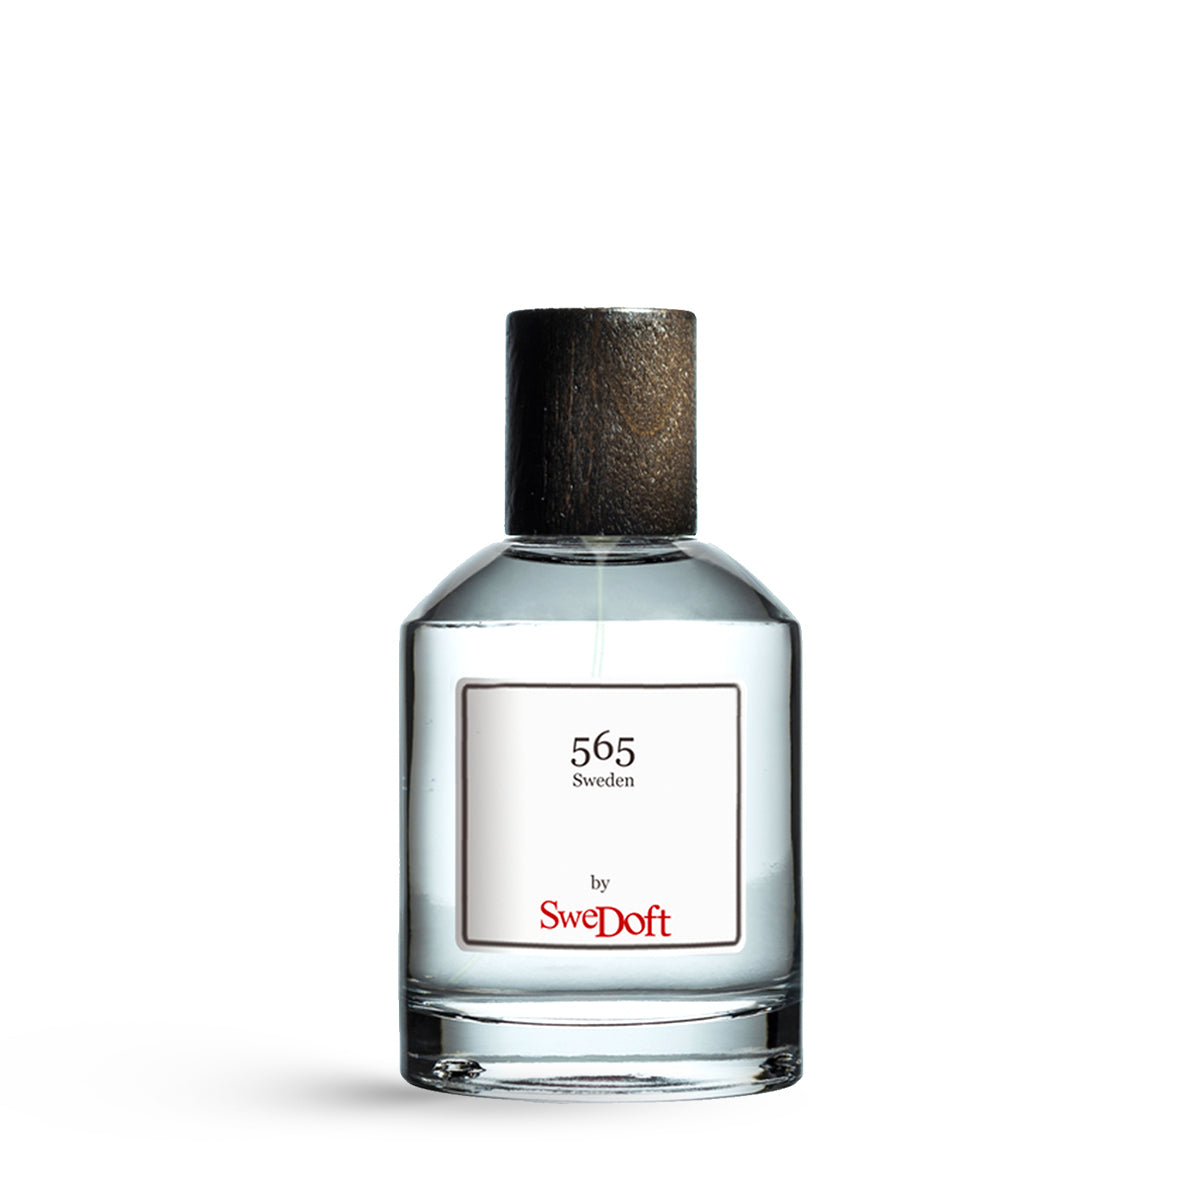 565 Swedoft Sweden perfume 100ml